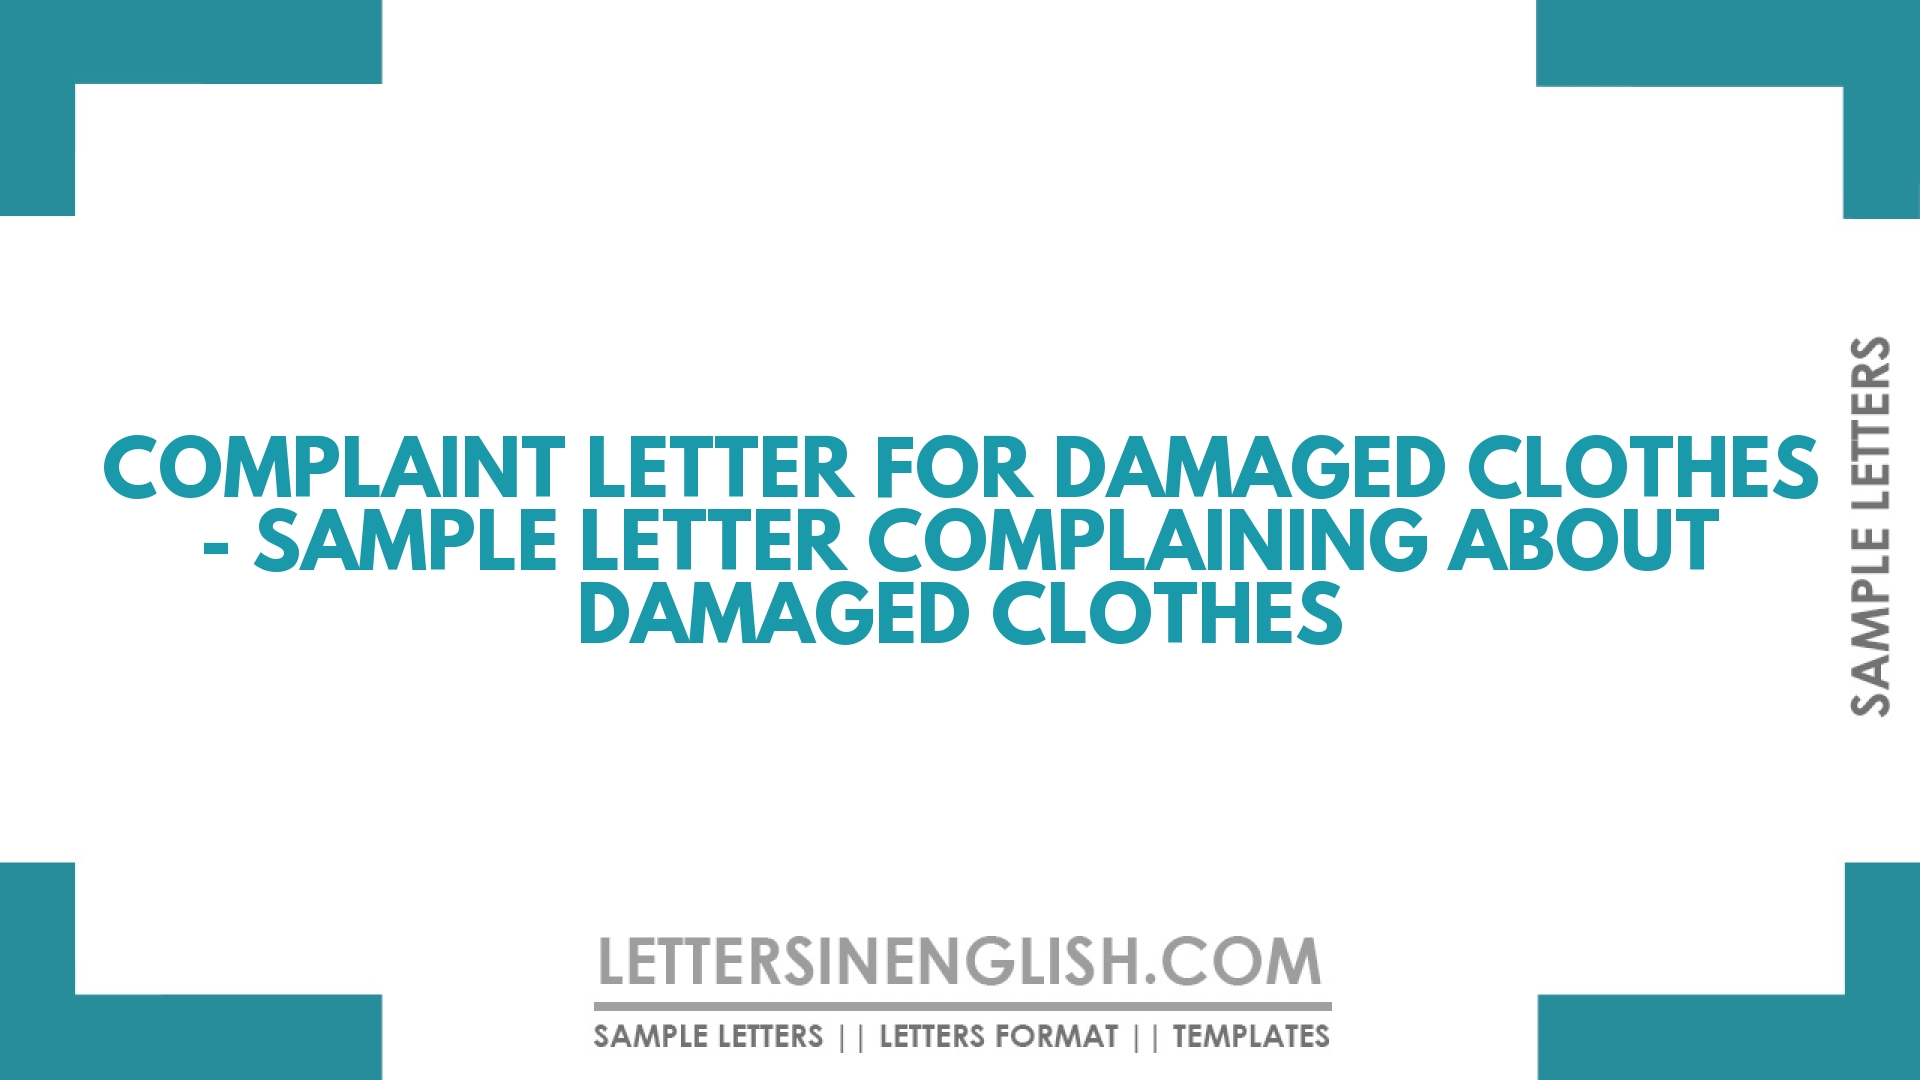 Complaint Letter for Damaged Clothes – Sample Letter Complaining About Damaged Clothes